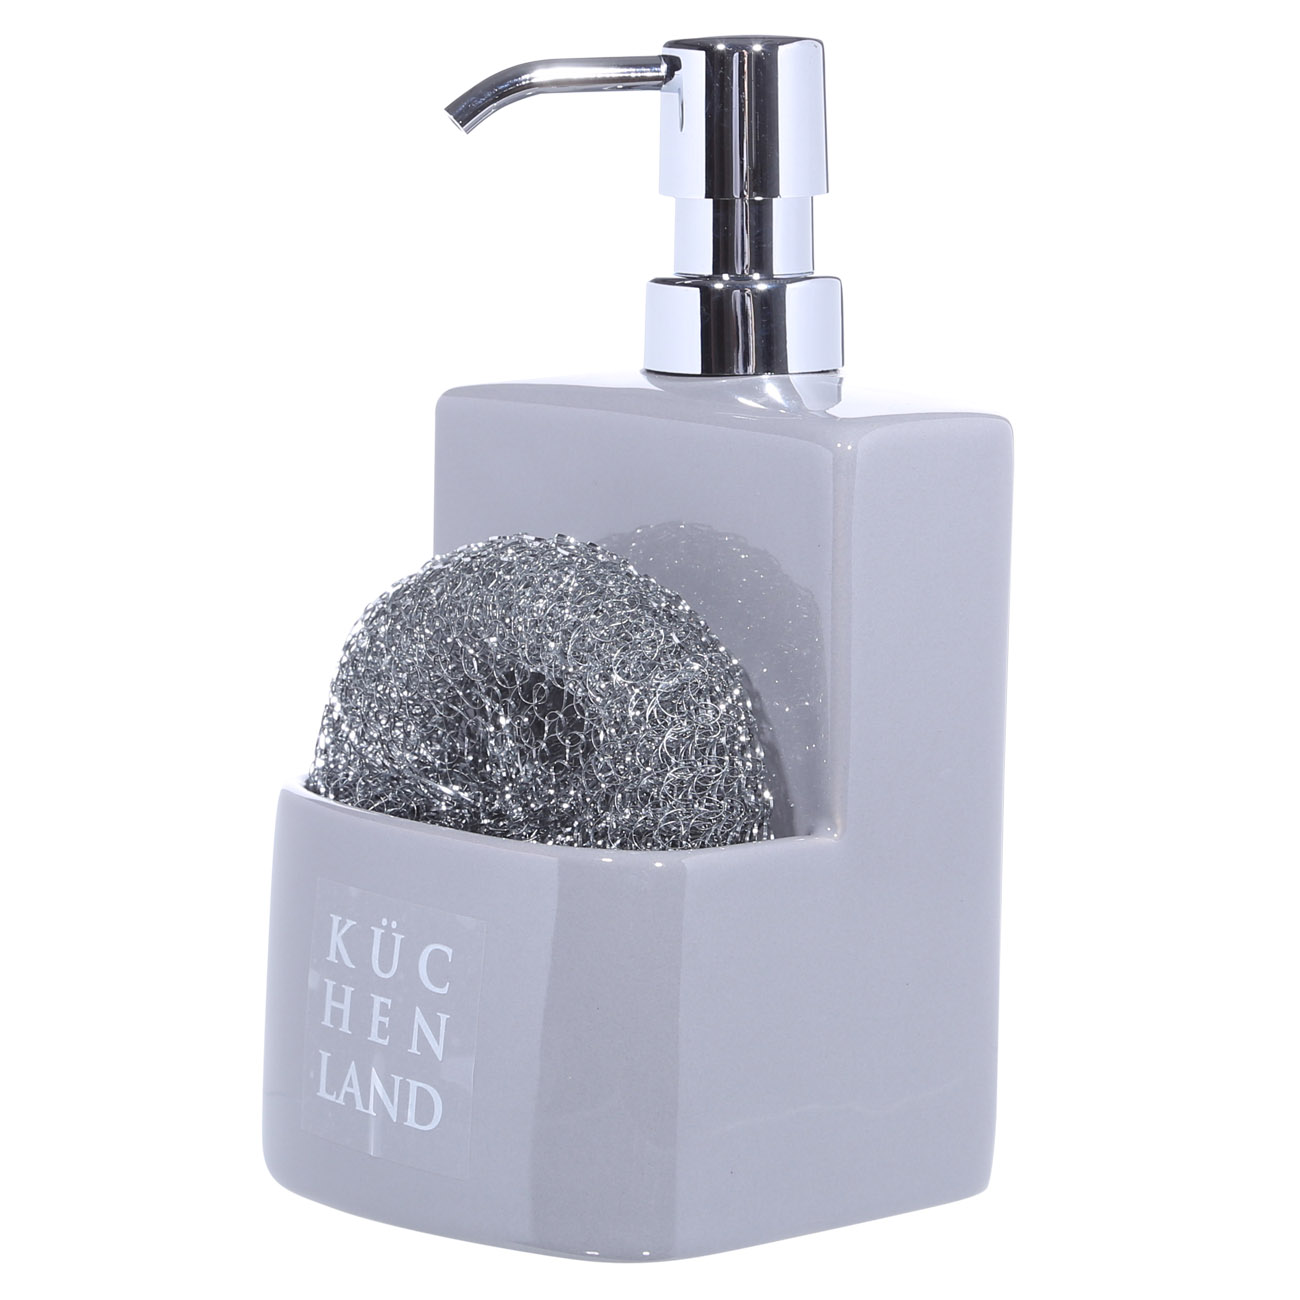 Detergent dispenser, 450 ml, Organizer, with sponge, Ceramic, Grey, Keeping изображение № 2